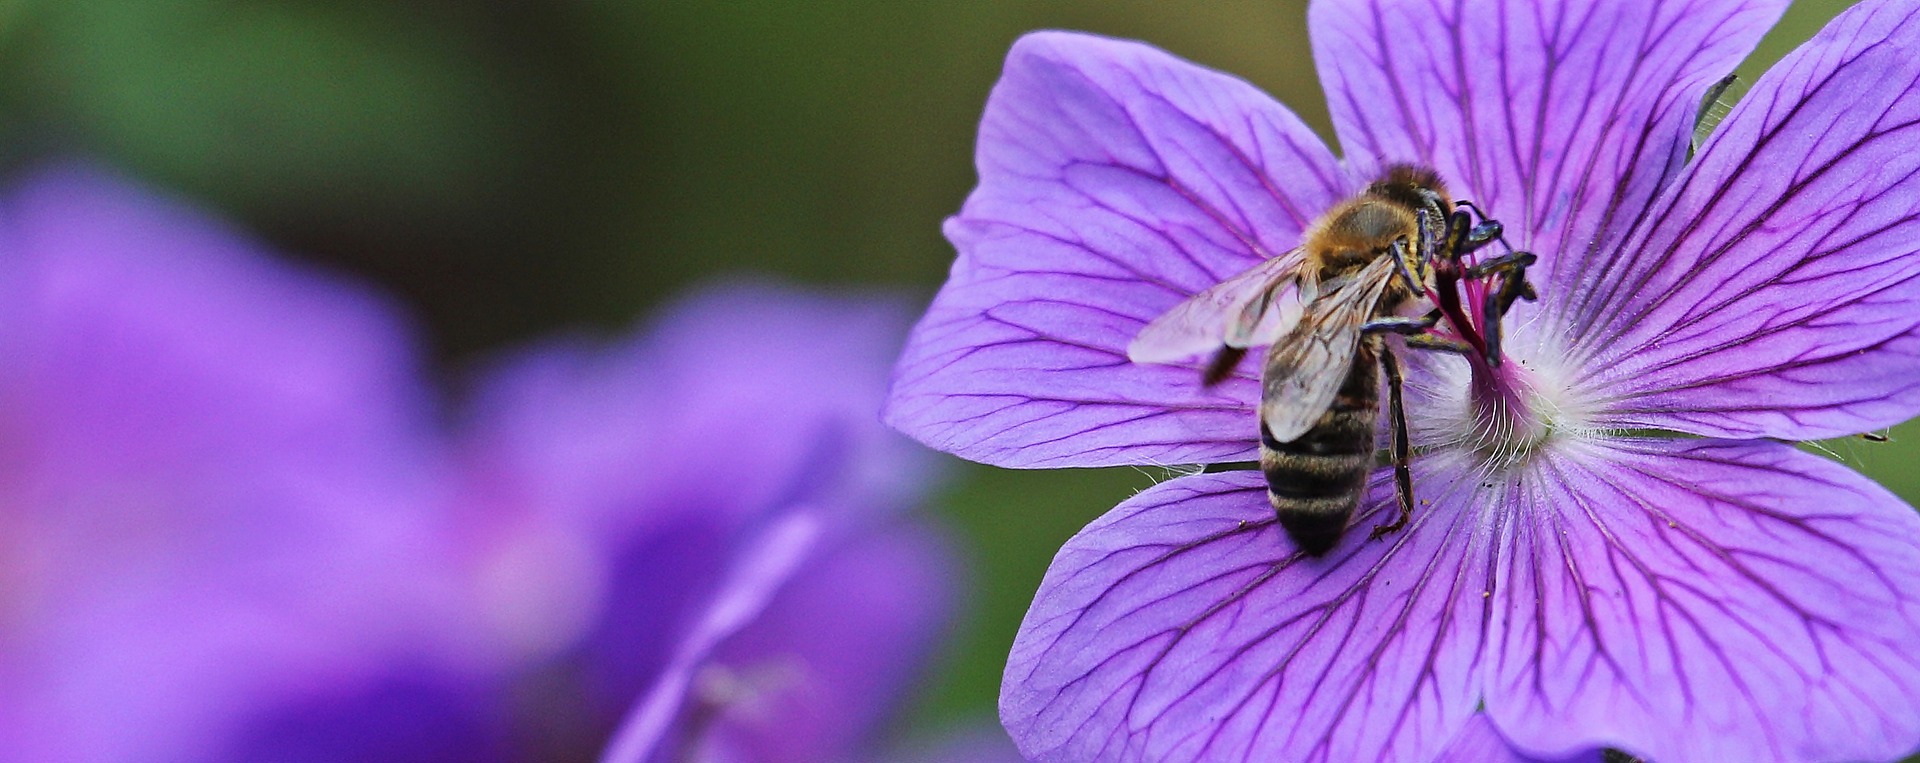 Bio Imkerei Bramreither - Mühlviertel - Imker - Bienenpatenschaft - Werde Bienenpate - Bienen Pate werden